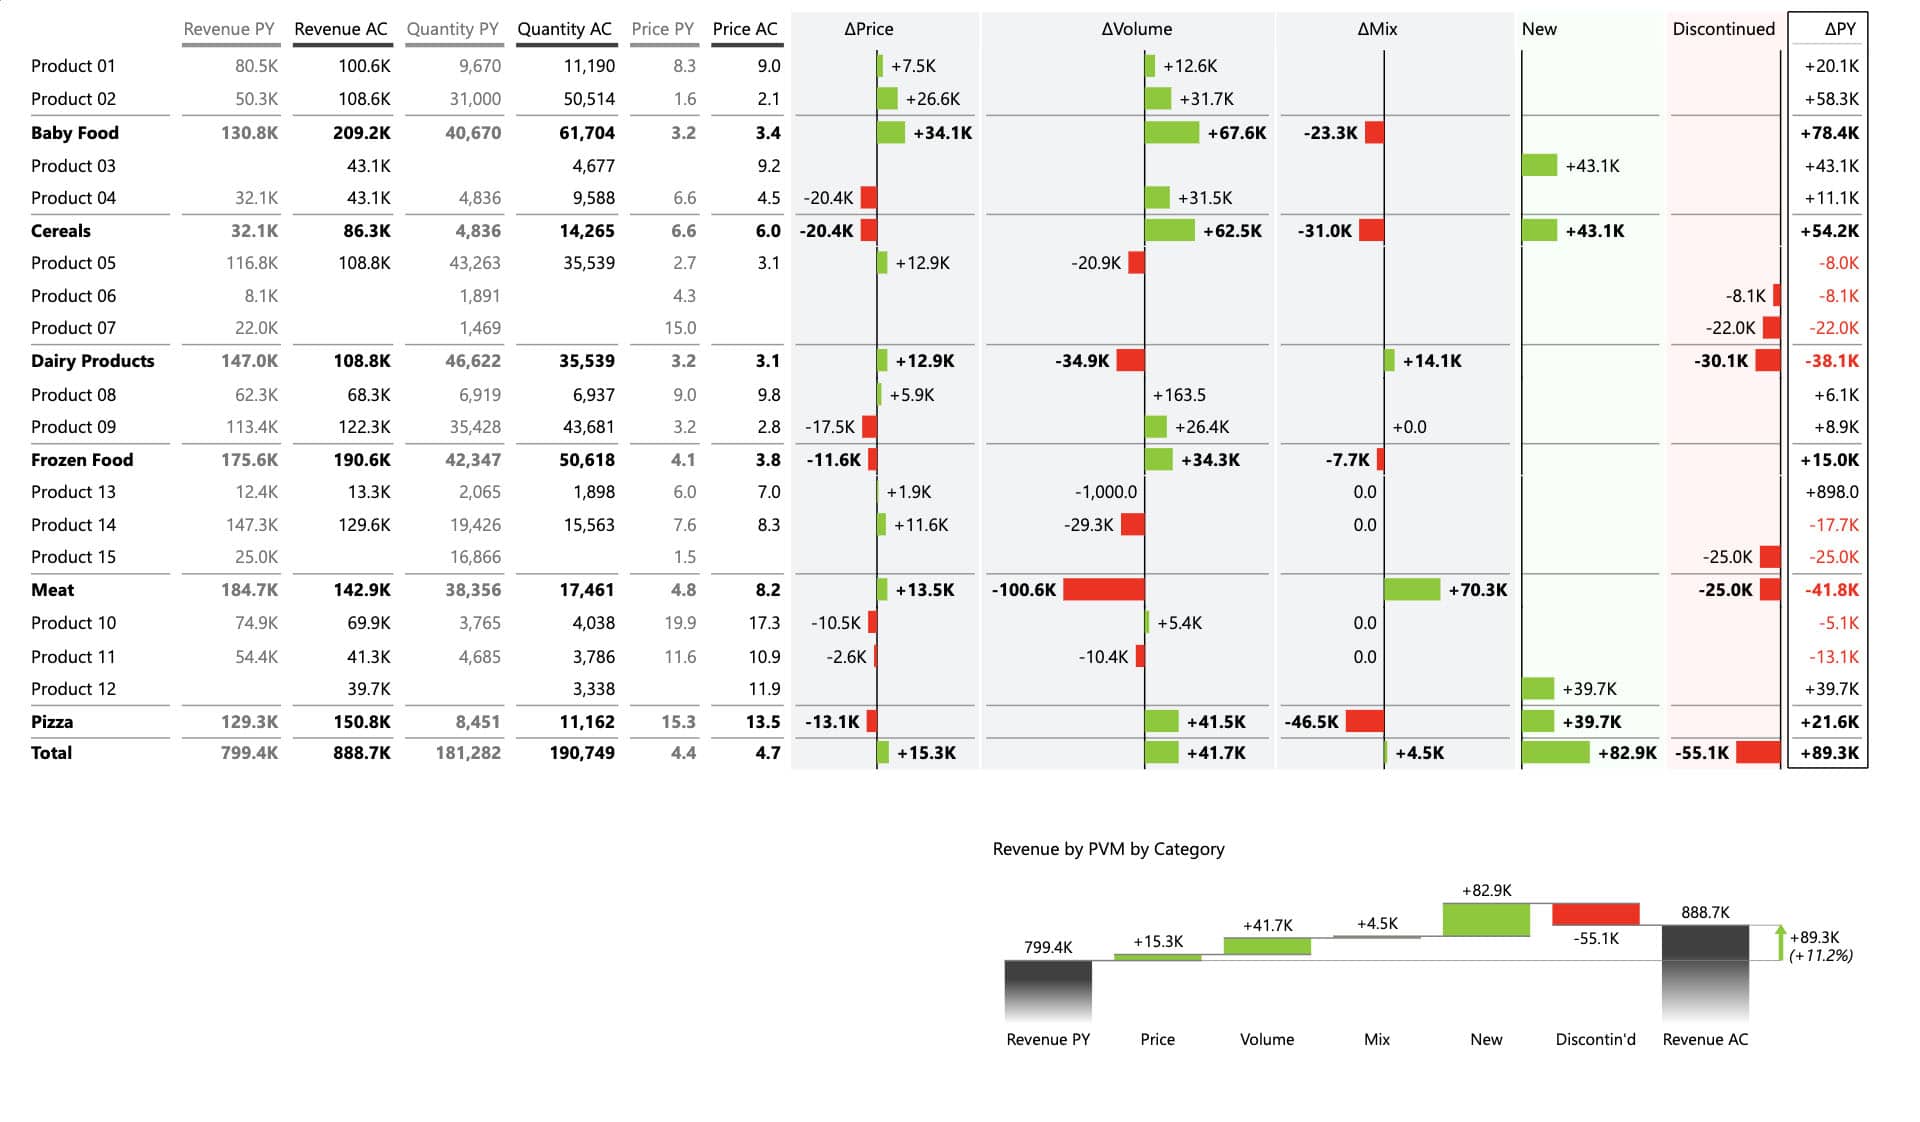 Price-Volume-Mix Variance Analysis Power BI Dashboard - Page 2